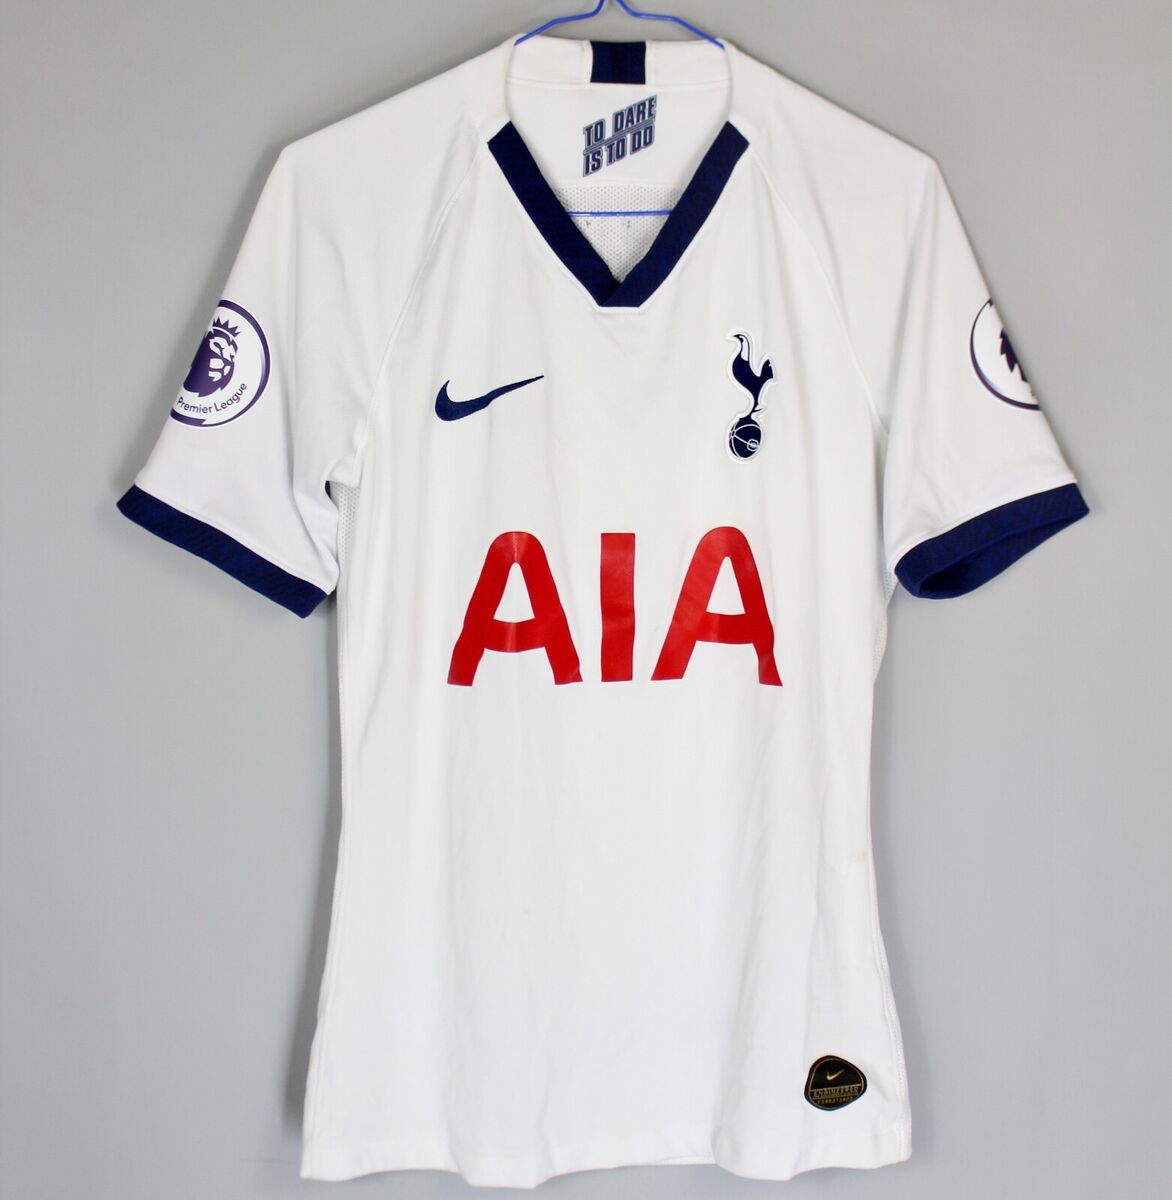 Nike présente les maillots 2019-2020 de Tottenham